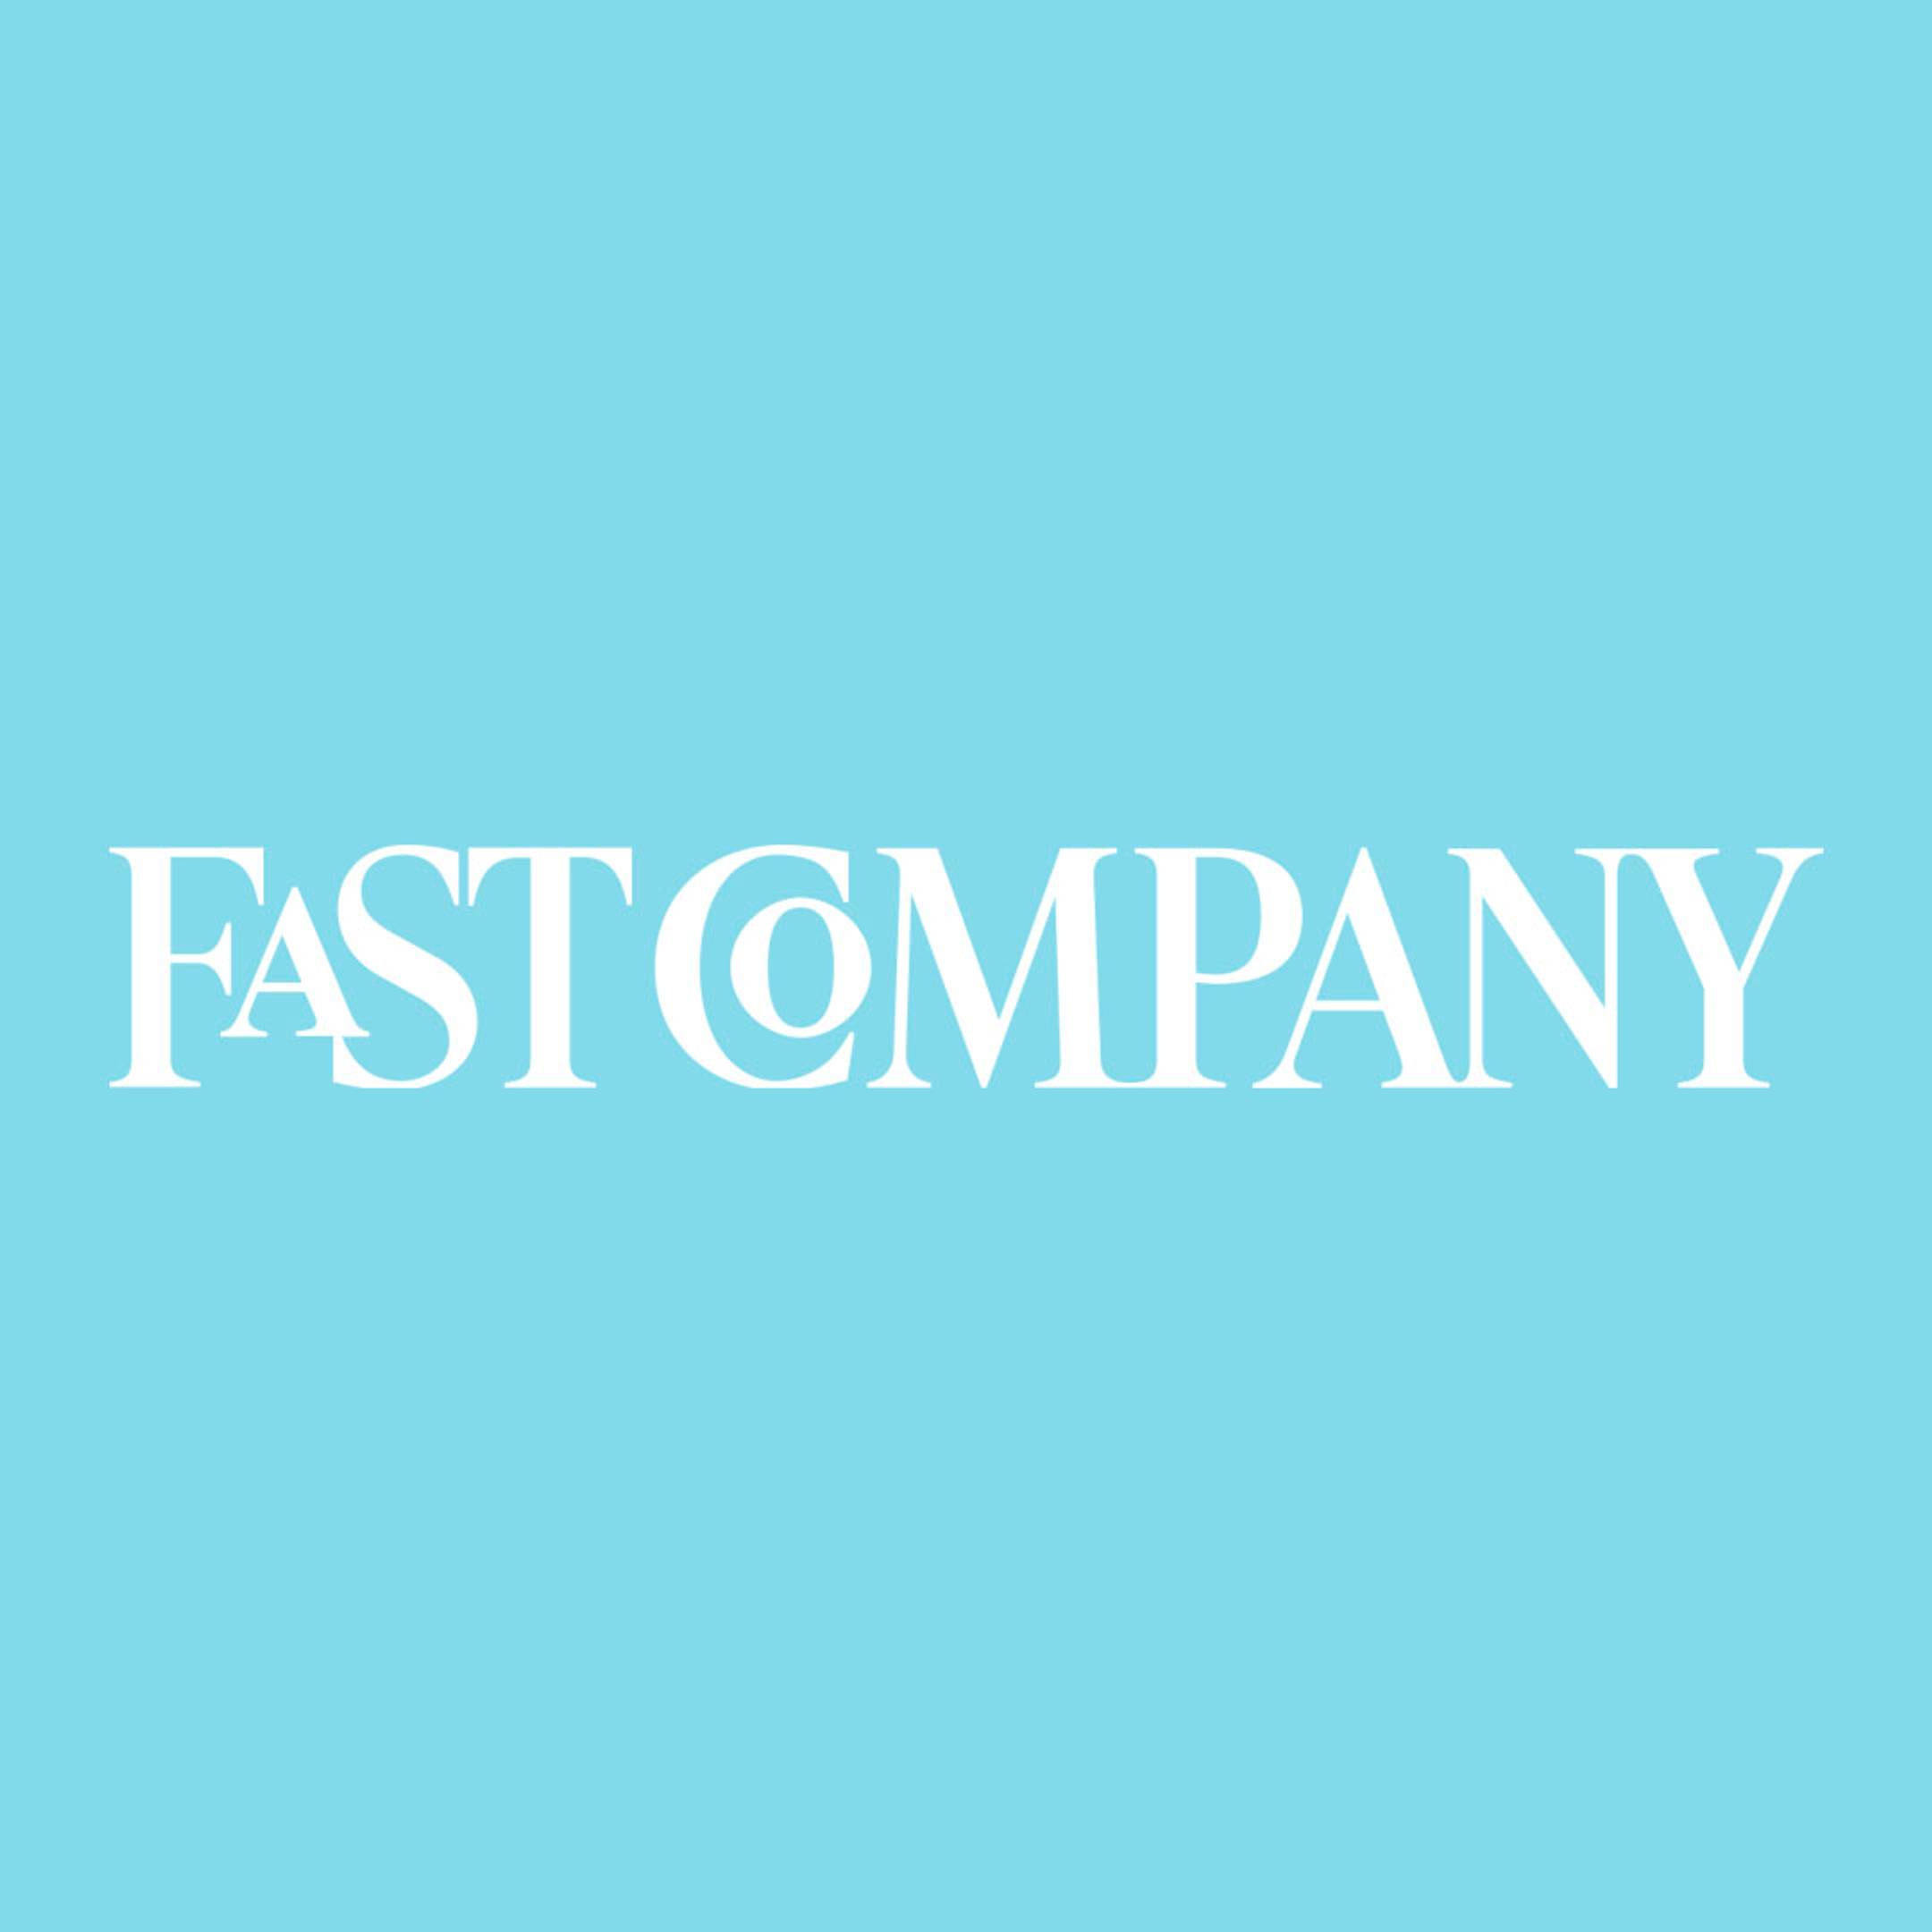 Fast Company logo on blue background 